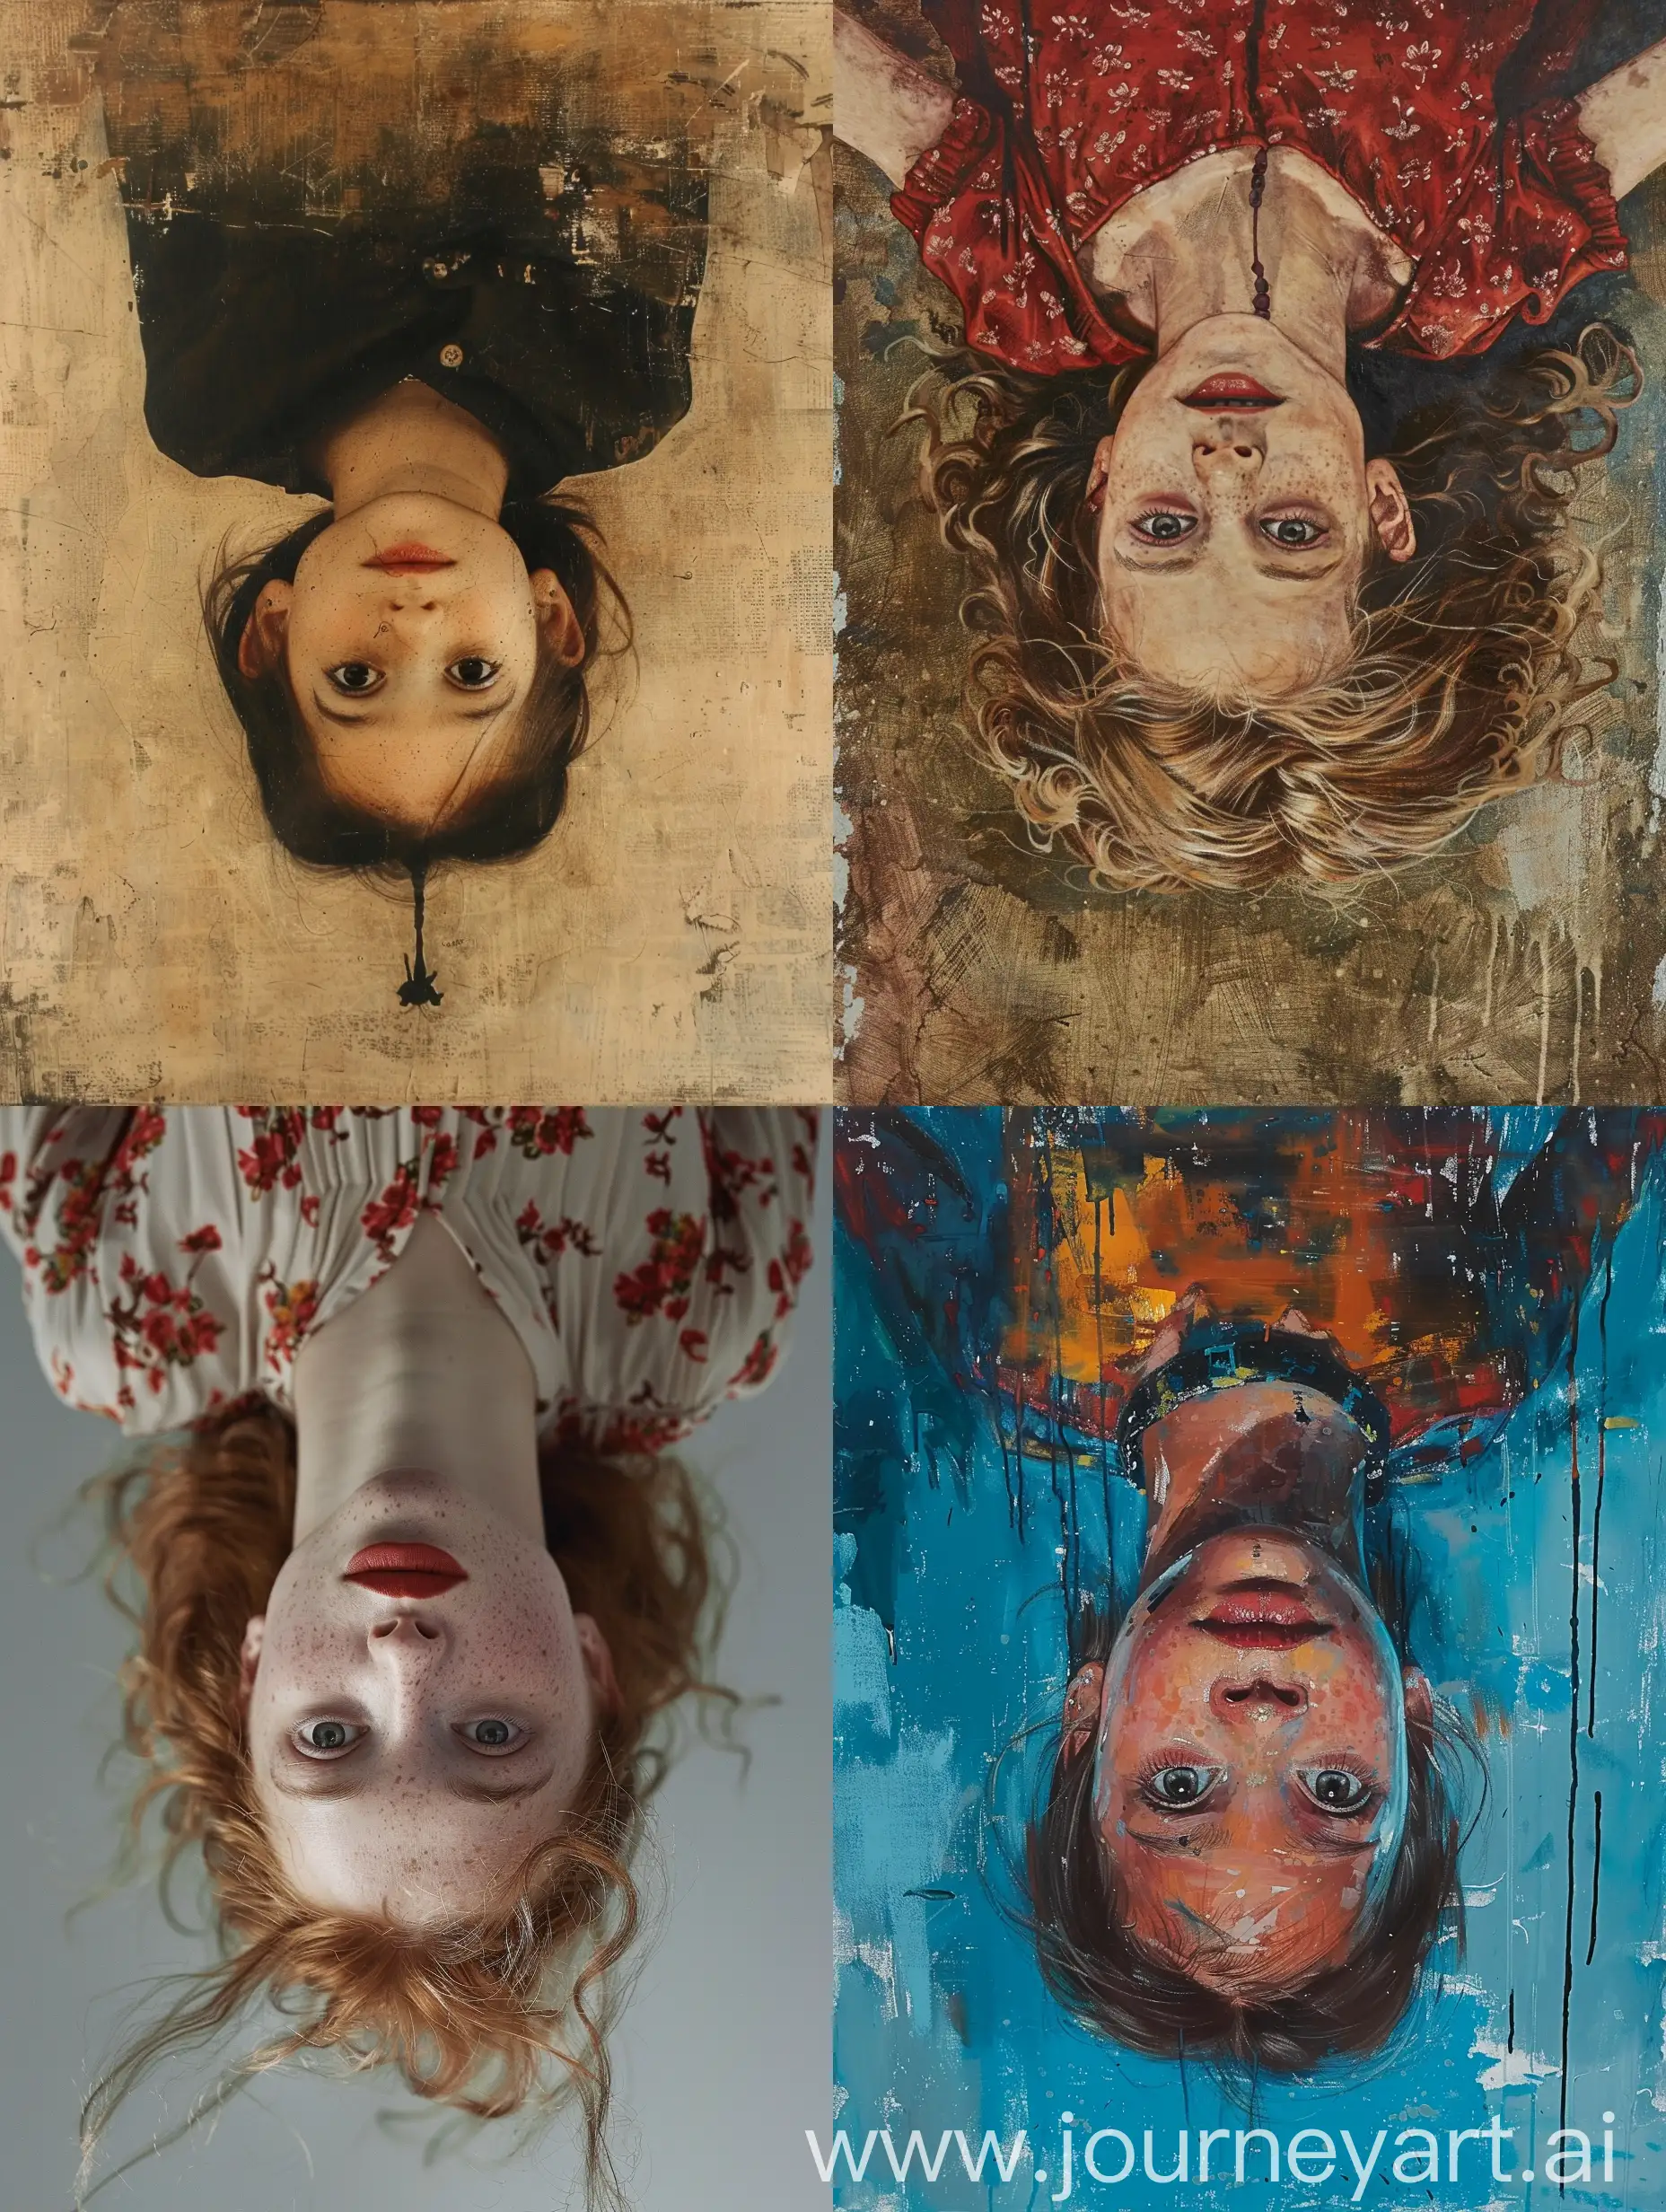 upside-down girl